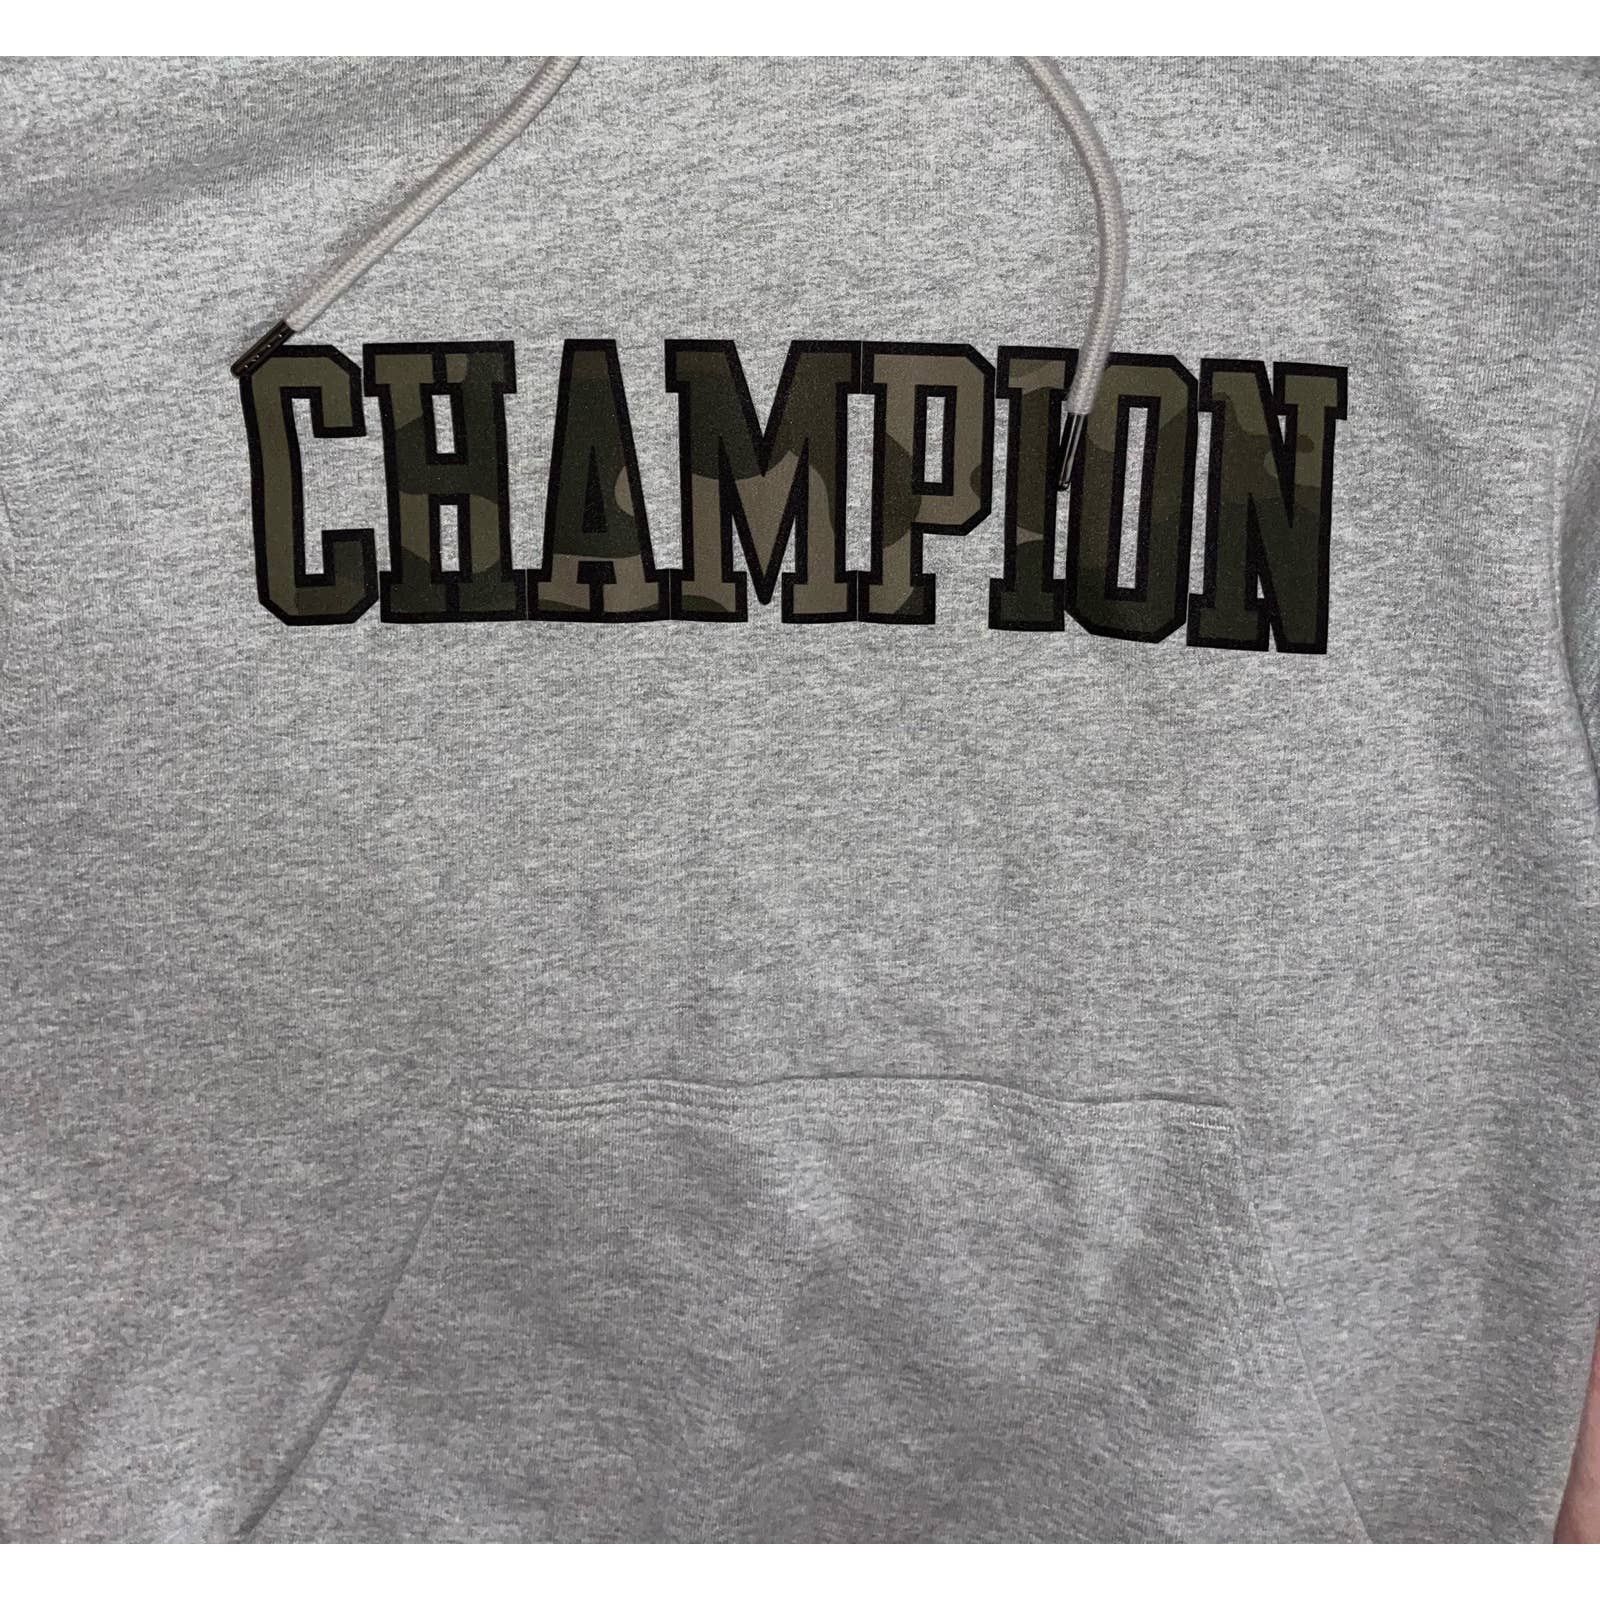 Champion Champion Men's Hoodie Sweatshirt Gym Camouflage Size US S / EU 44-46 / 1 - 5 Preview